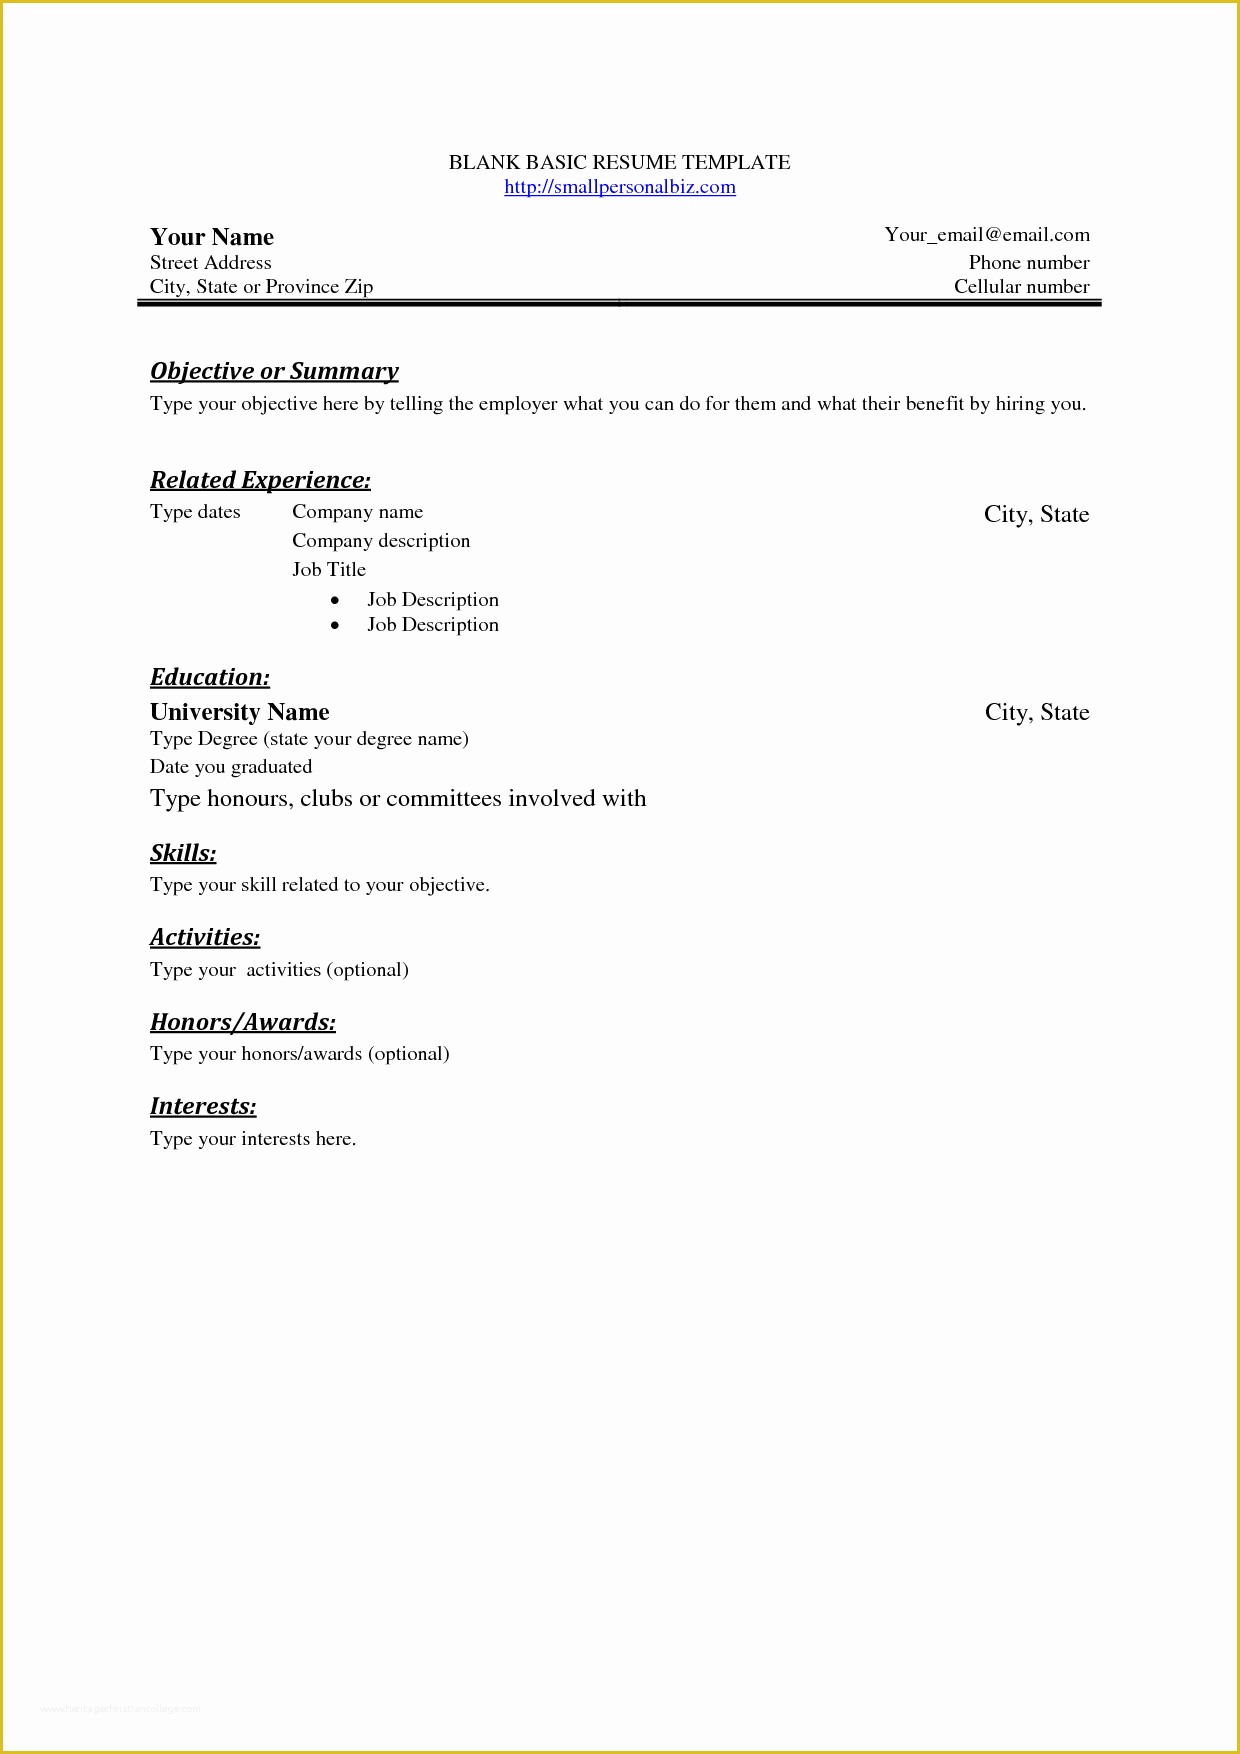 Free Simple Resume Templates Of Free Basic Blank Resume Template